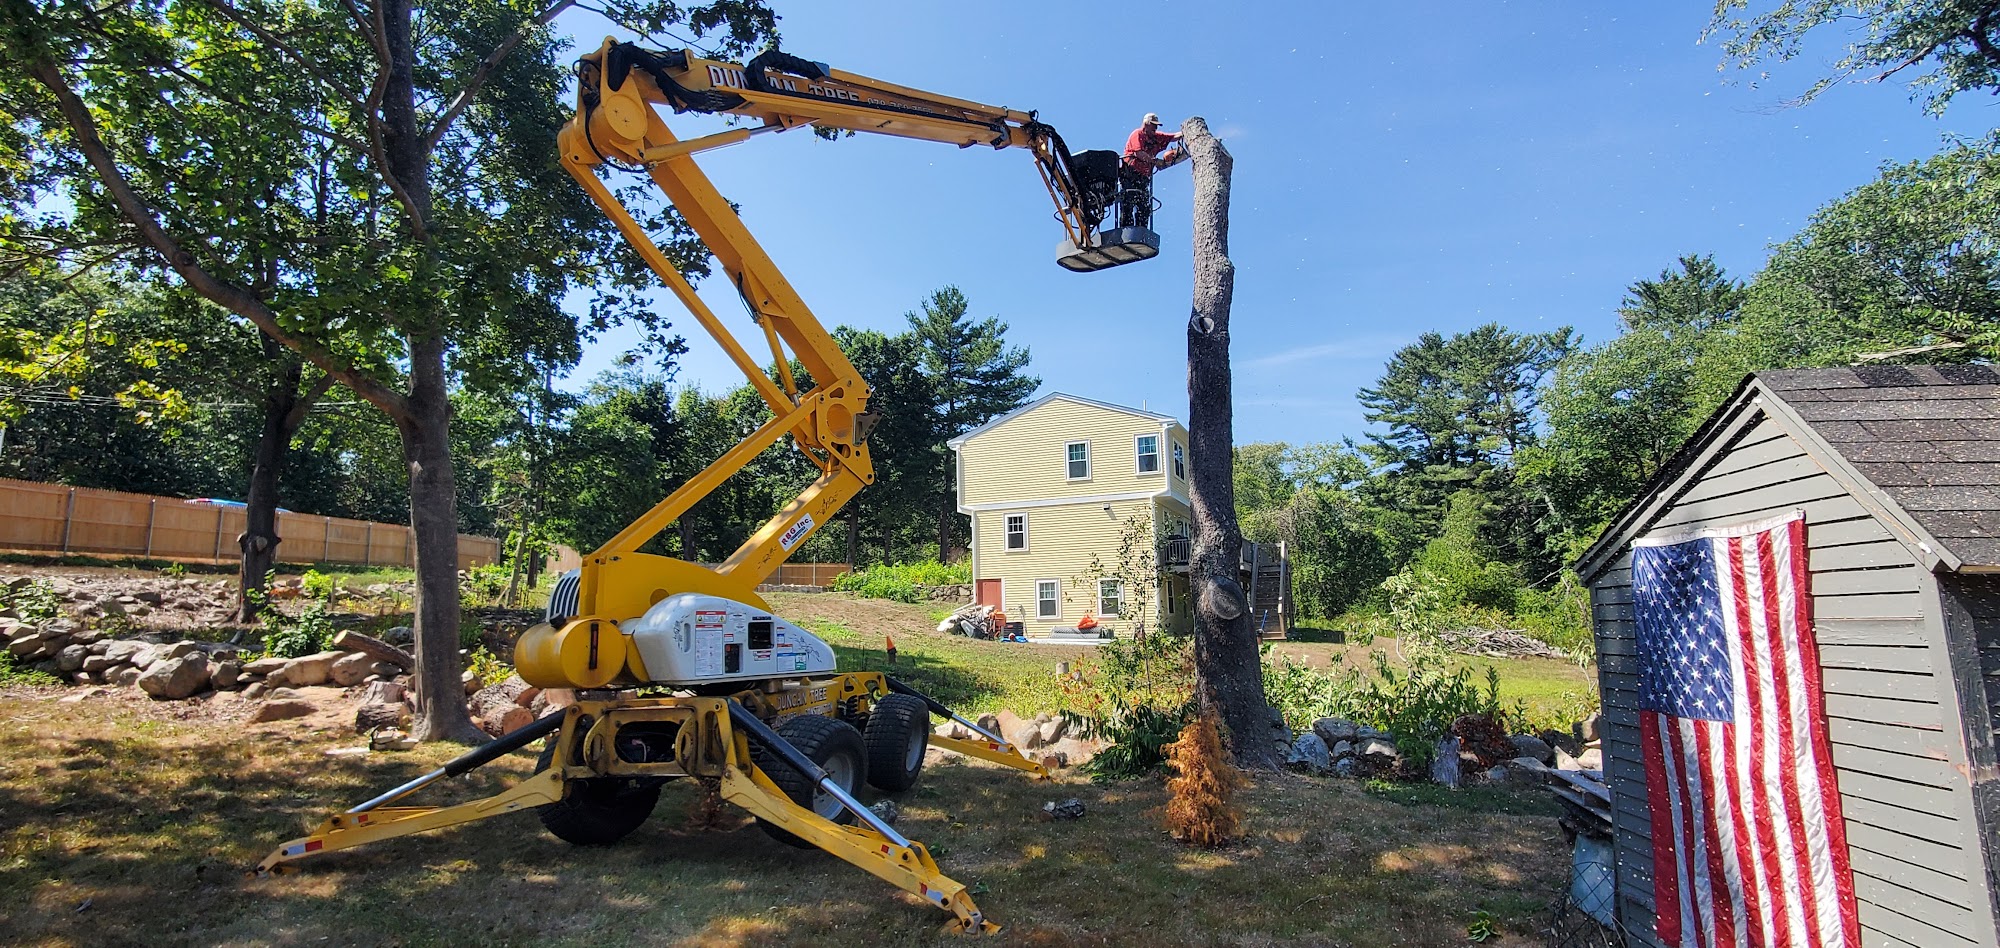 Duncan Tree Landscape & Construction 21 Western Ave, Essex Massachusetts 01929